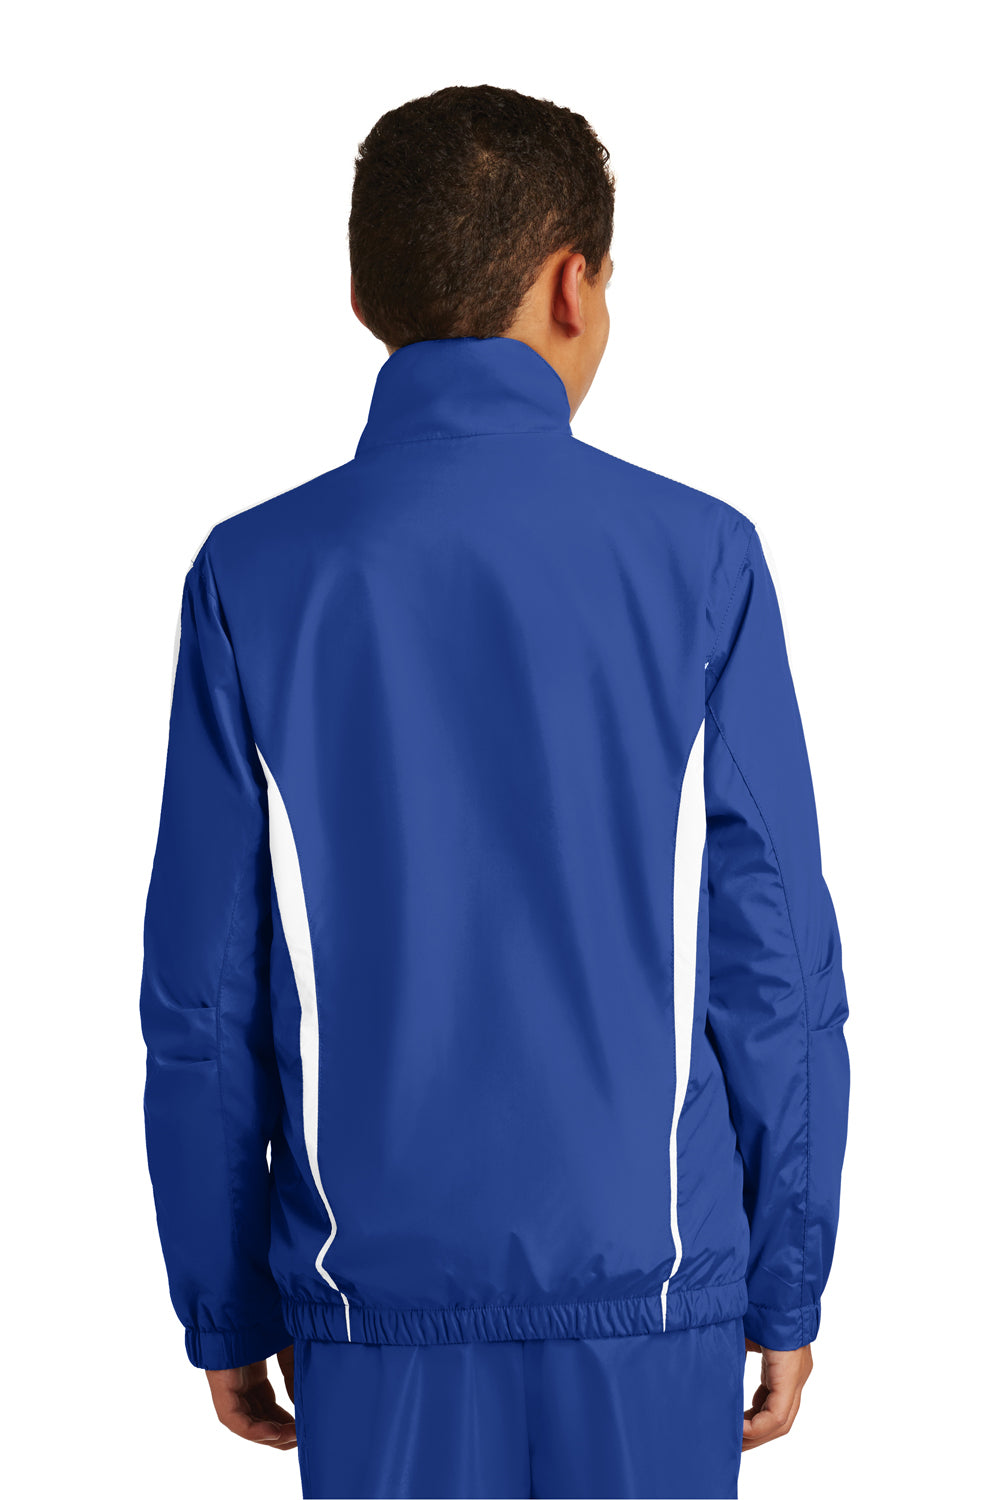 Sport-Tek YST60 Youth Water Resistant Full Zip Jacket Royal Blue/White Back